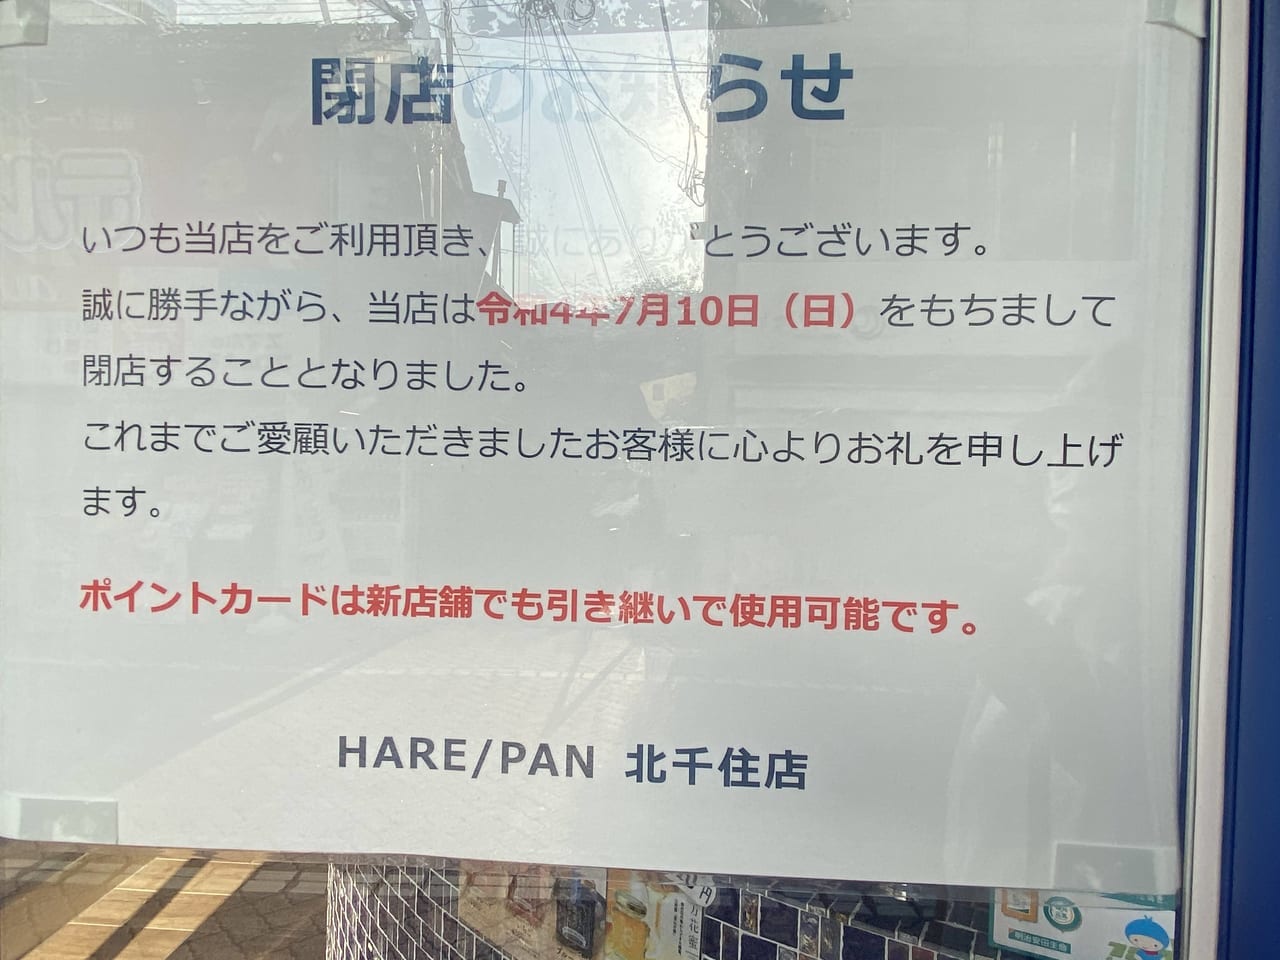 HARE/PAN 北千住閉店